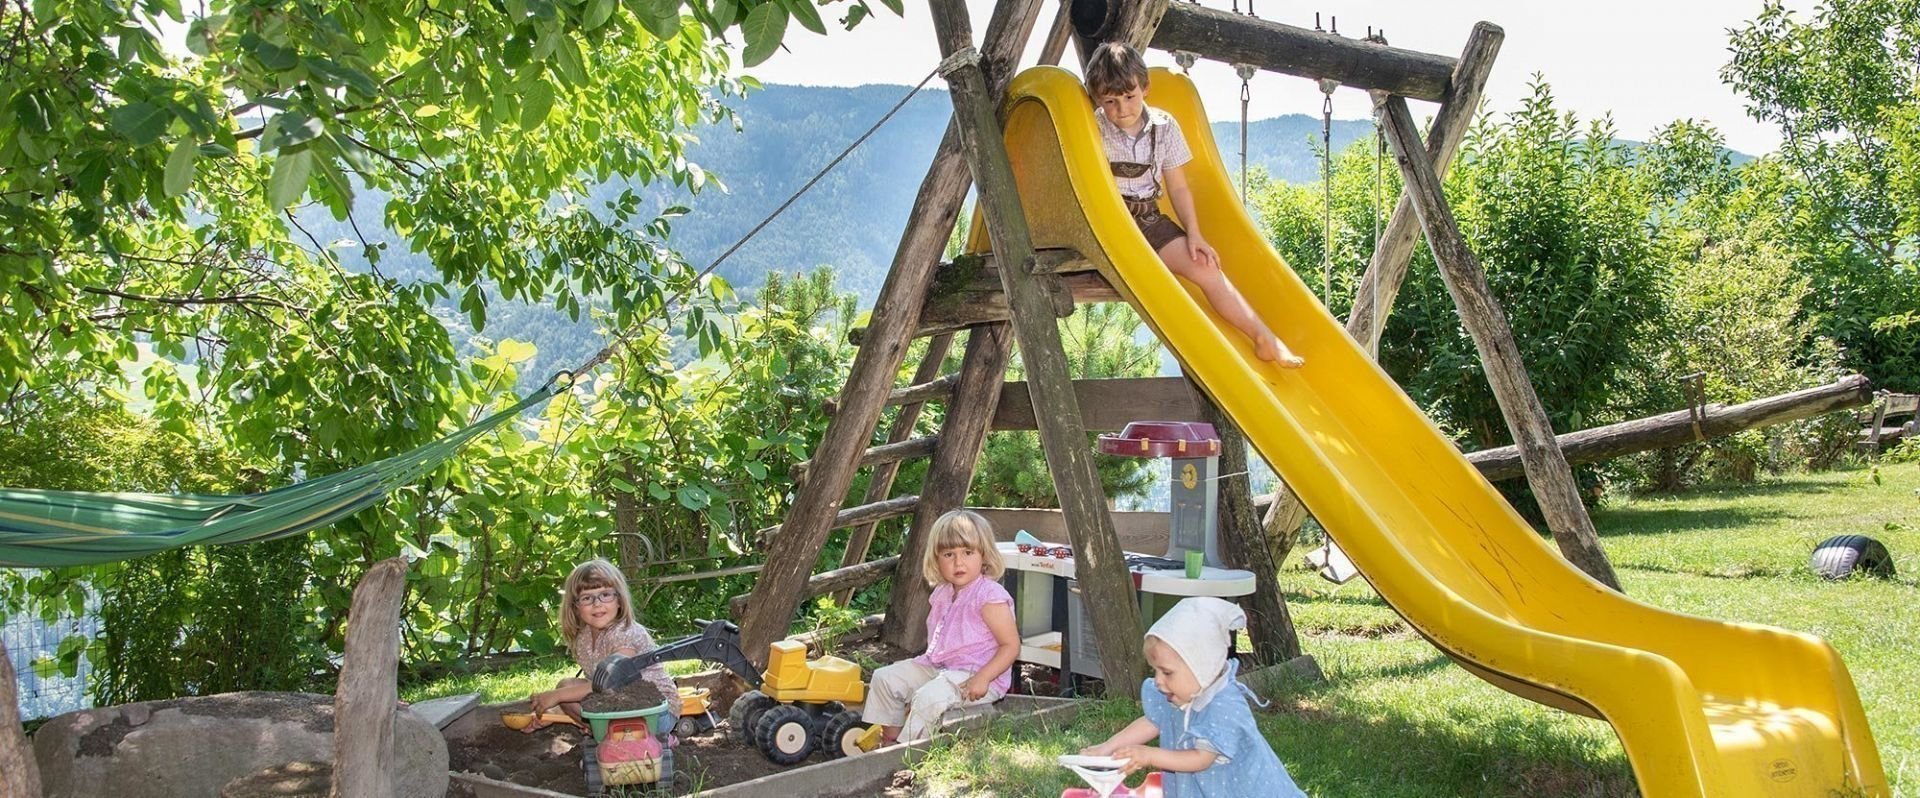 Dolomites Farm holidays with the whole family